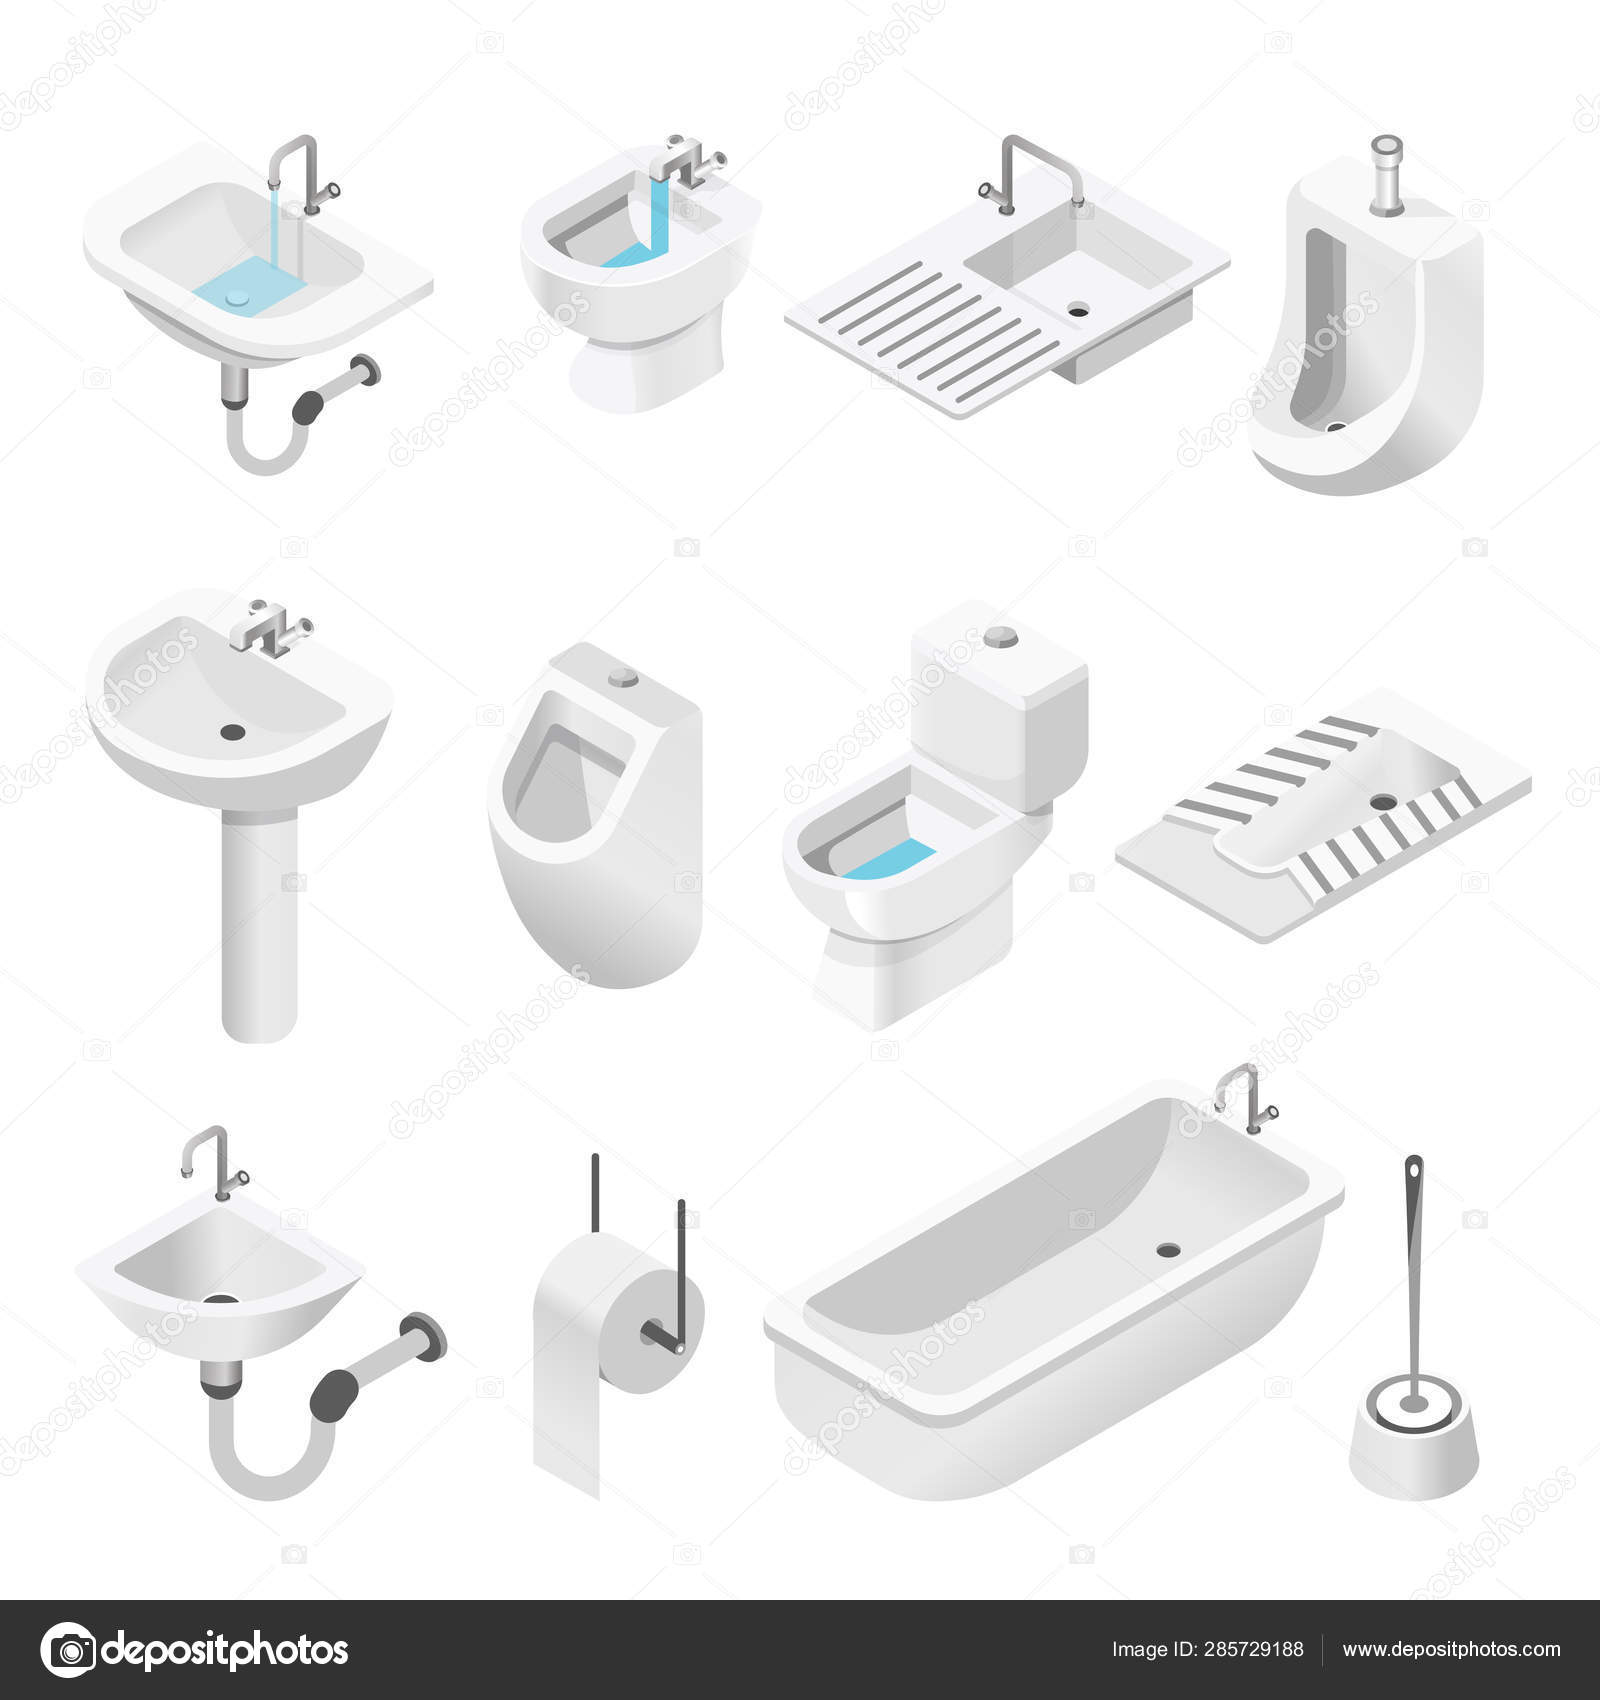 https://st4.depositphotos.com/1028367/28572/v/1600/depositphotos_285729188-stock-illustration-bathroom-furniture-and-equipment-isolated.jpg